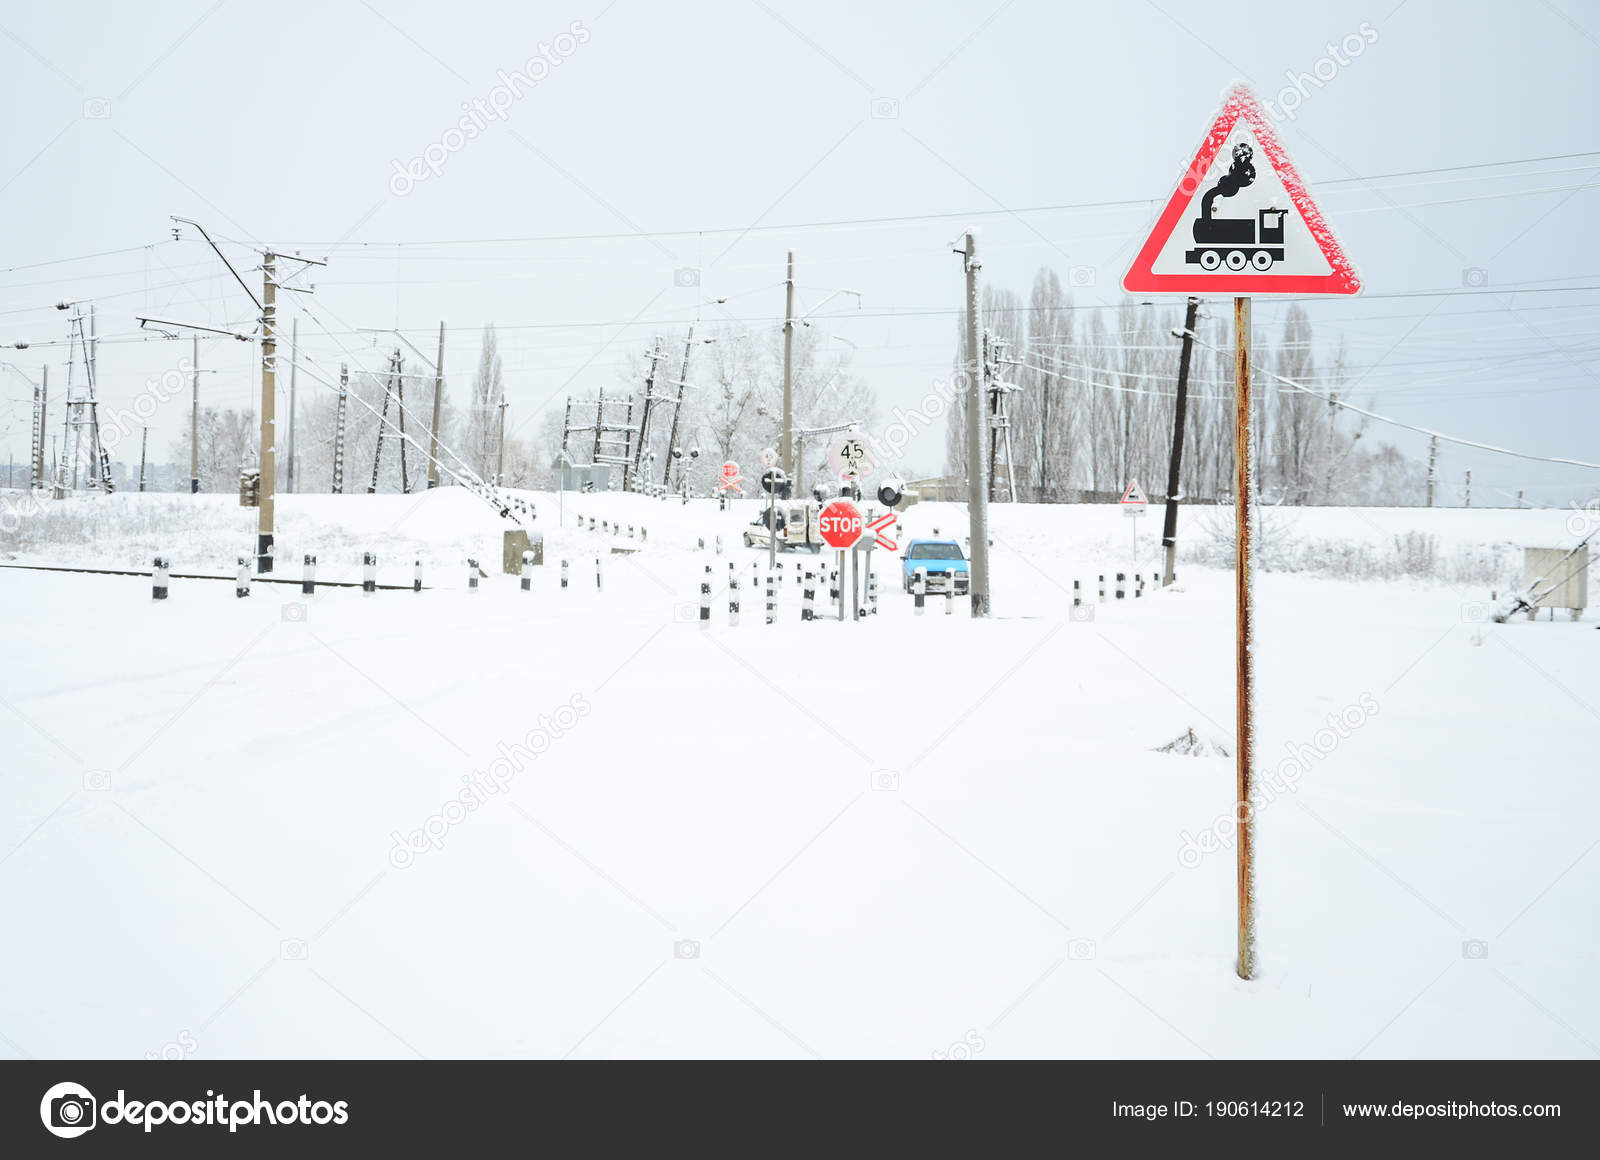 Railway Crossing Barrier Lot Warning Signs Snowy Winter Season Stock Photo By C Mehaniq